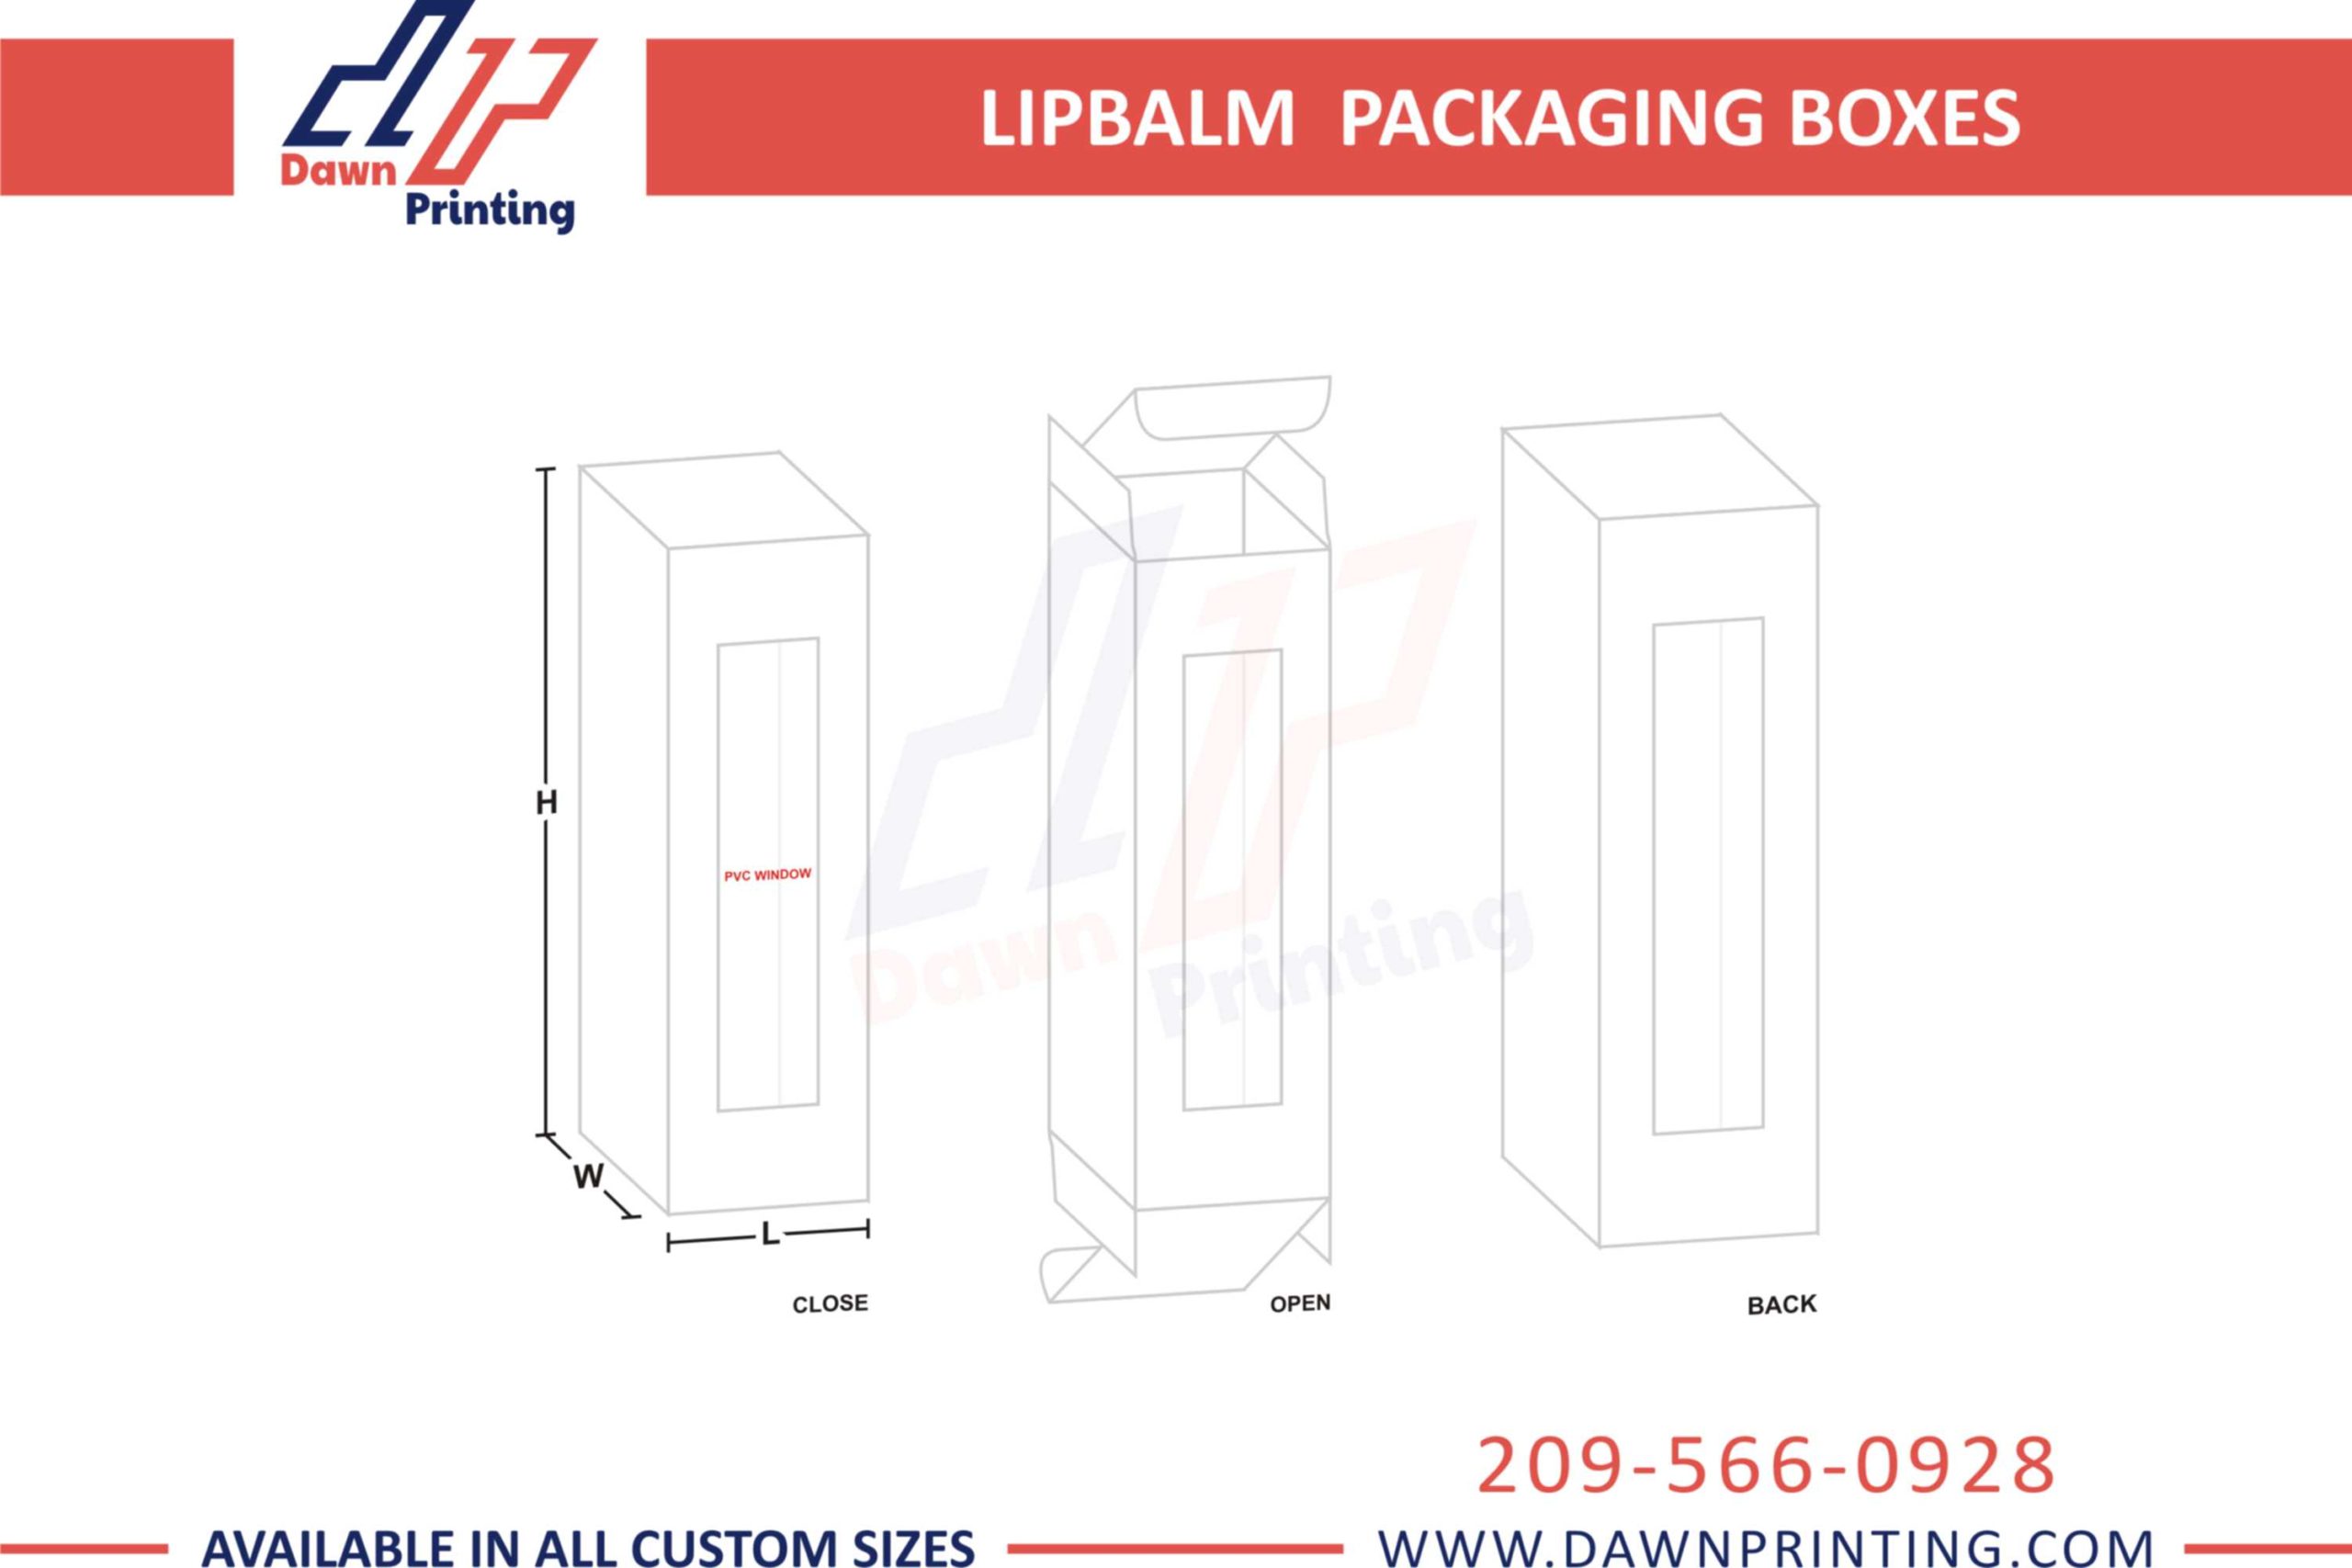 3D Customized Lip Balm Boxes - Dawn Printing